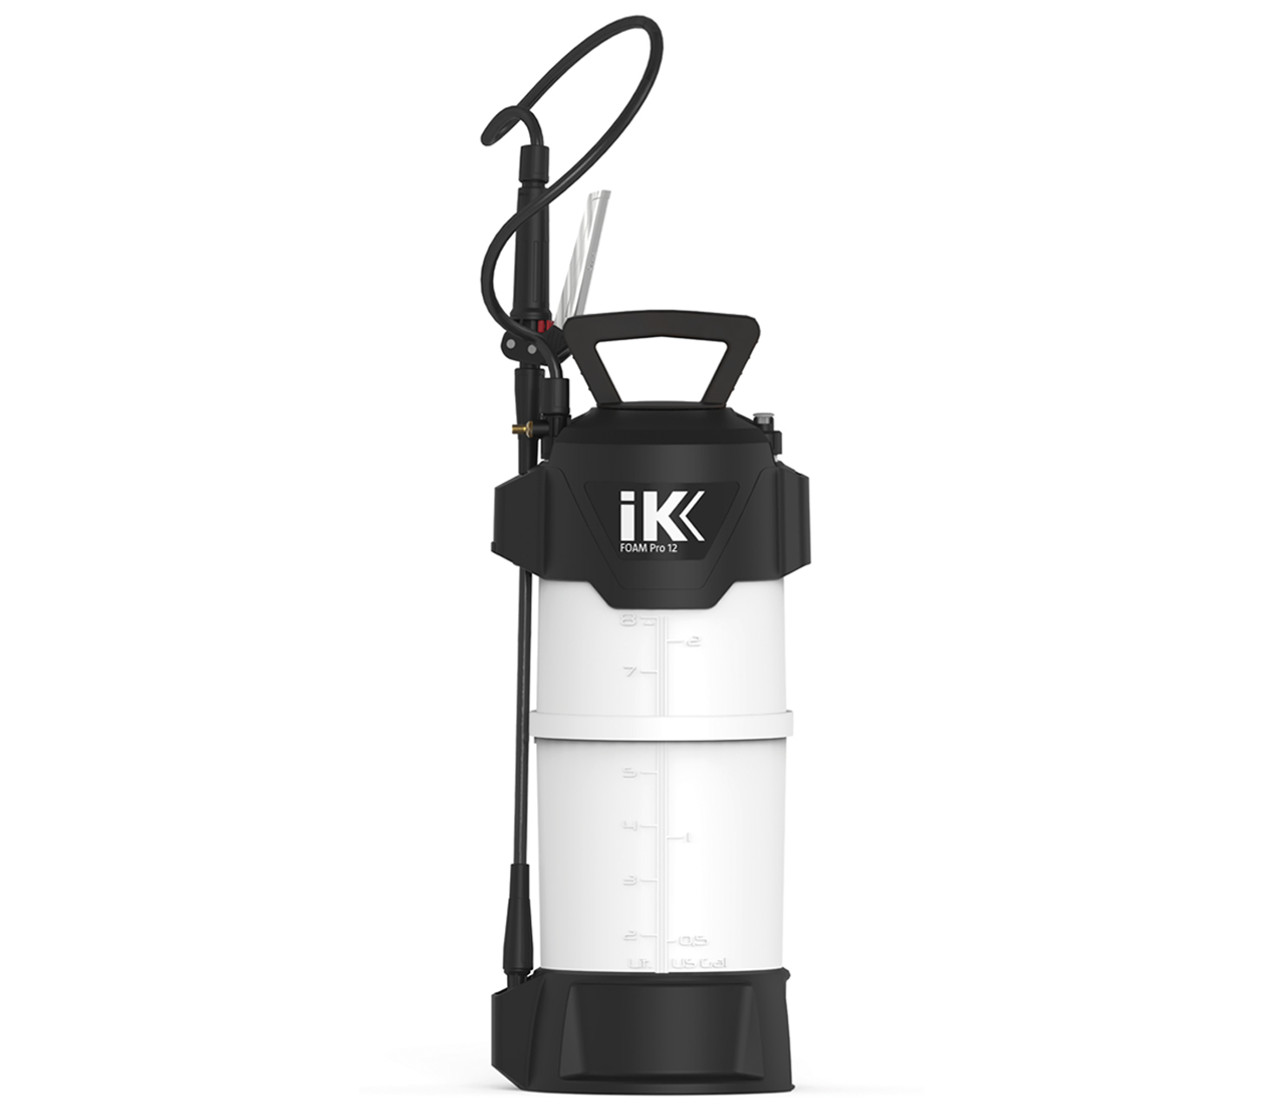 IK Multi-12 2 Gallon Industrial Sprayer for Automotive, Sanitation 83811921  - First Industrial Supplies